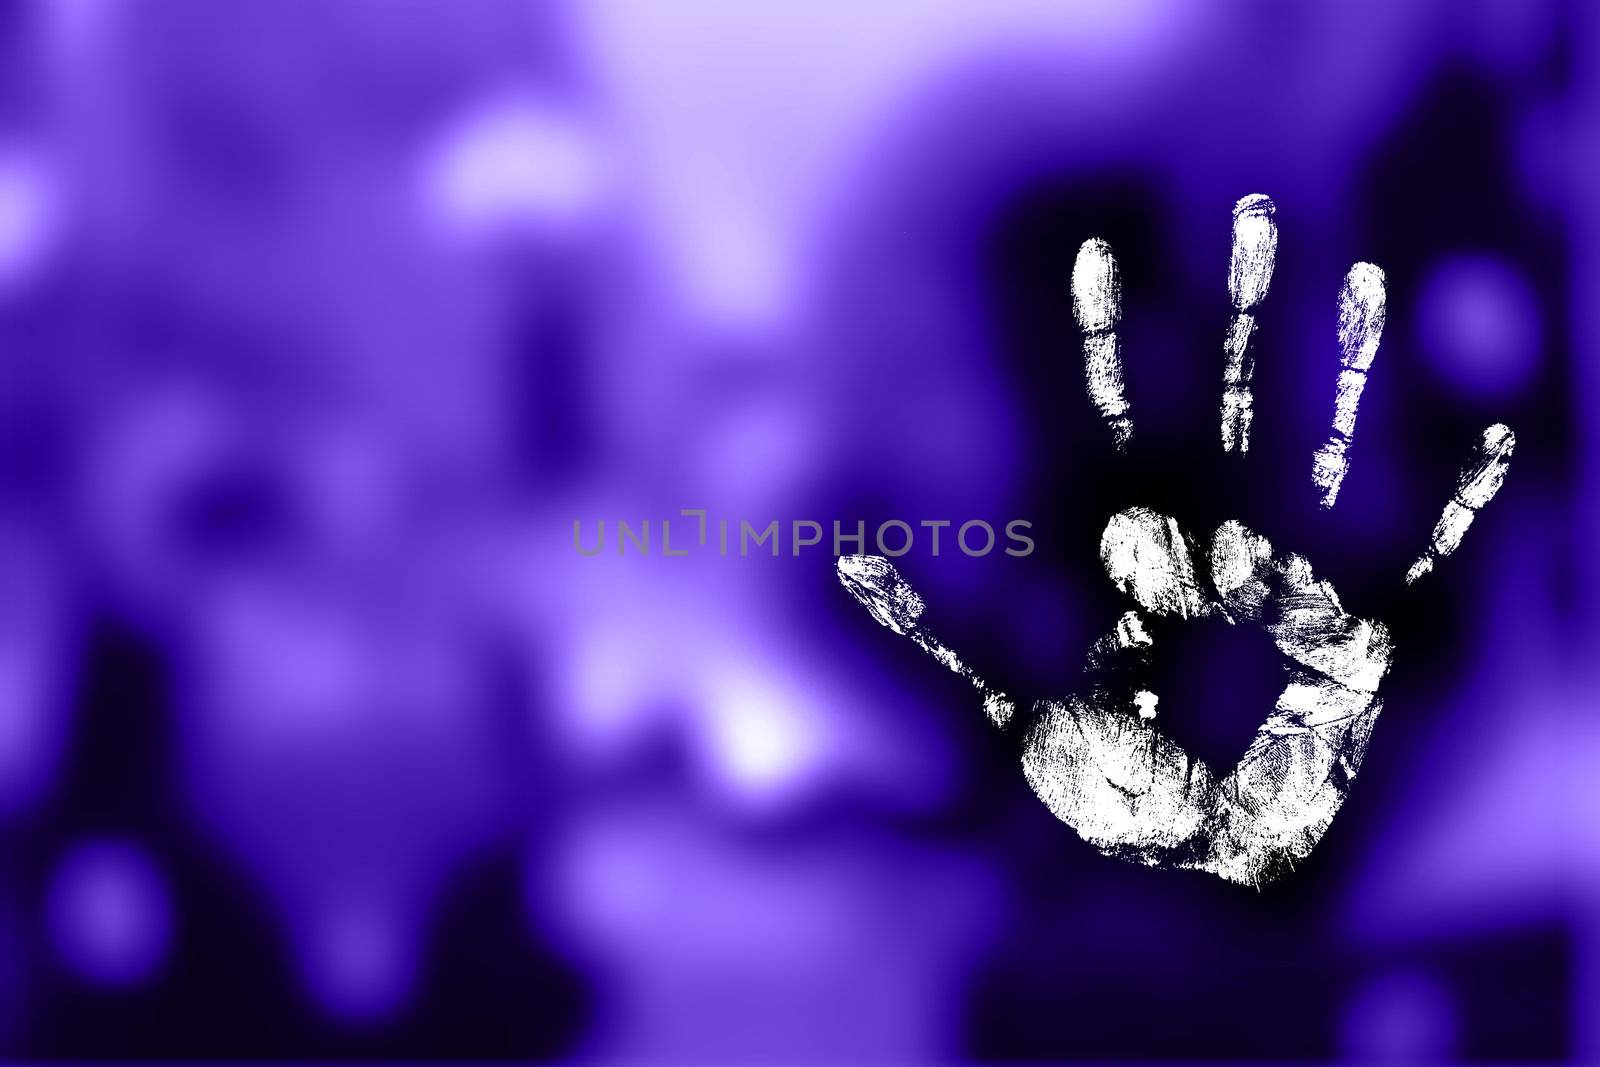 Handprint by photochecker